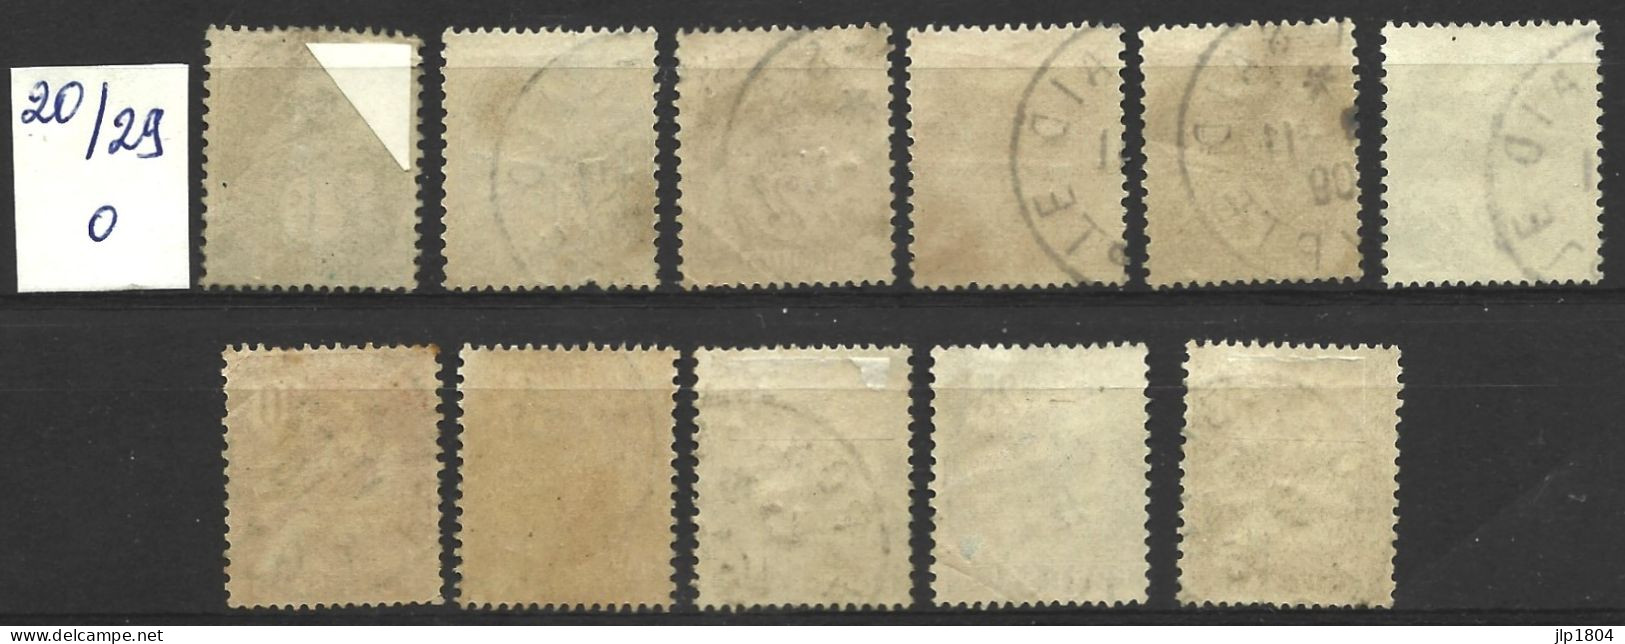 PORT SAÏD Série YT N° 20 à 29 Oblitérés - Used Stamps